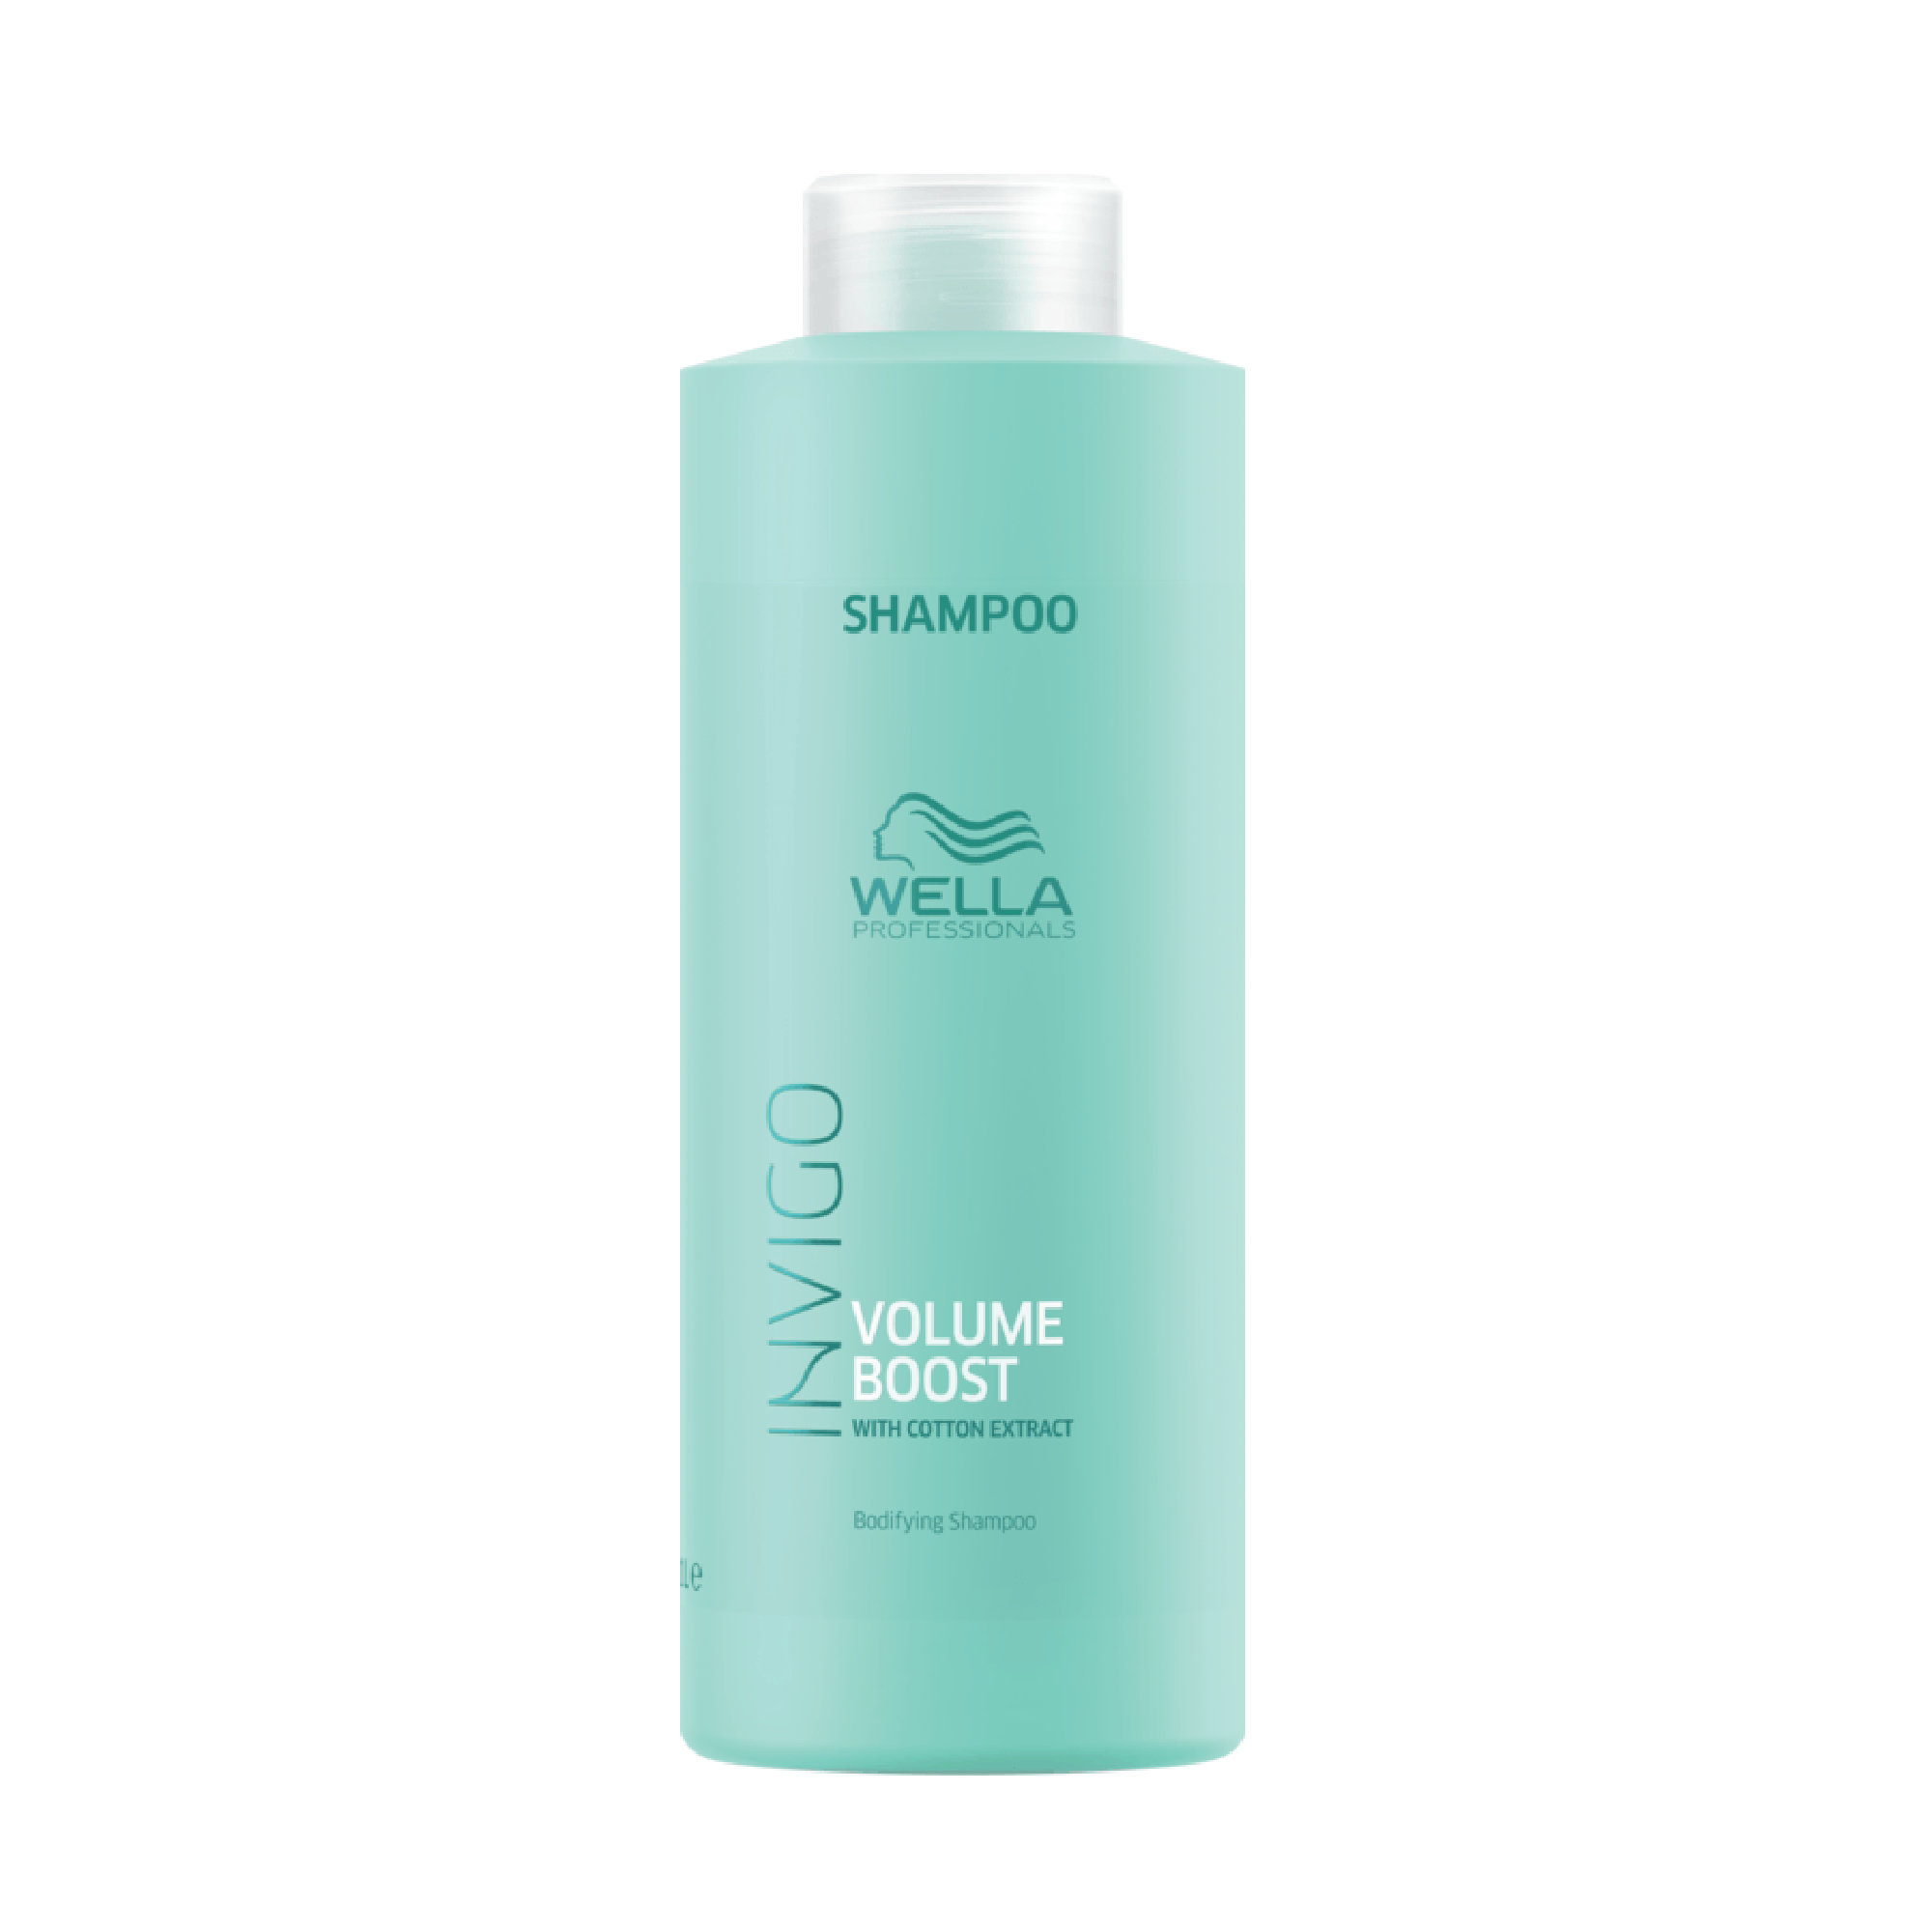 Wella Invigo Volume Boost Bodifying Shampoo / 33OZ